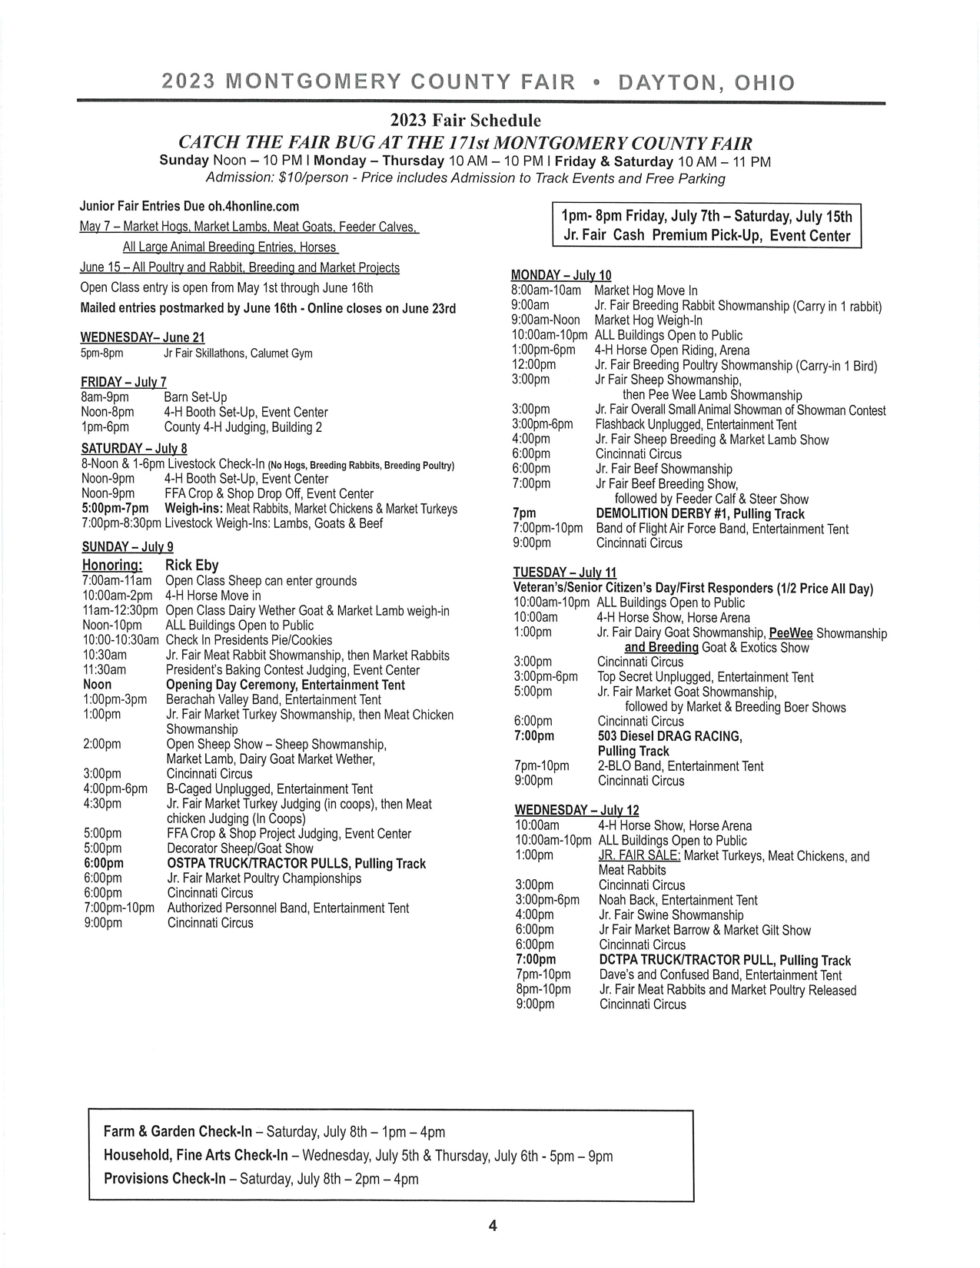 2023 Fair Schedule | Montgomery County Fairgrounds